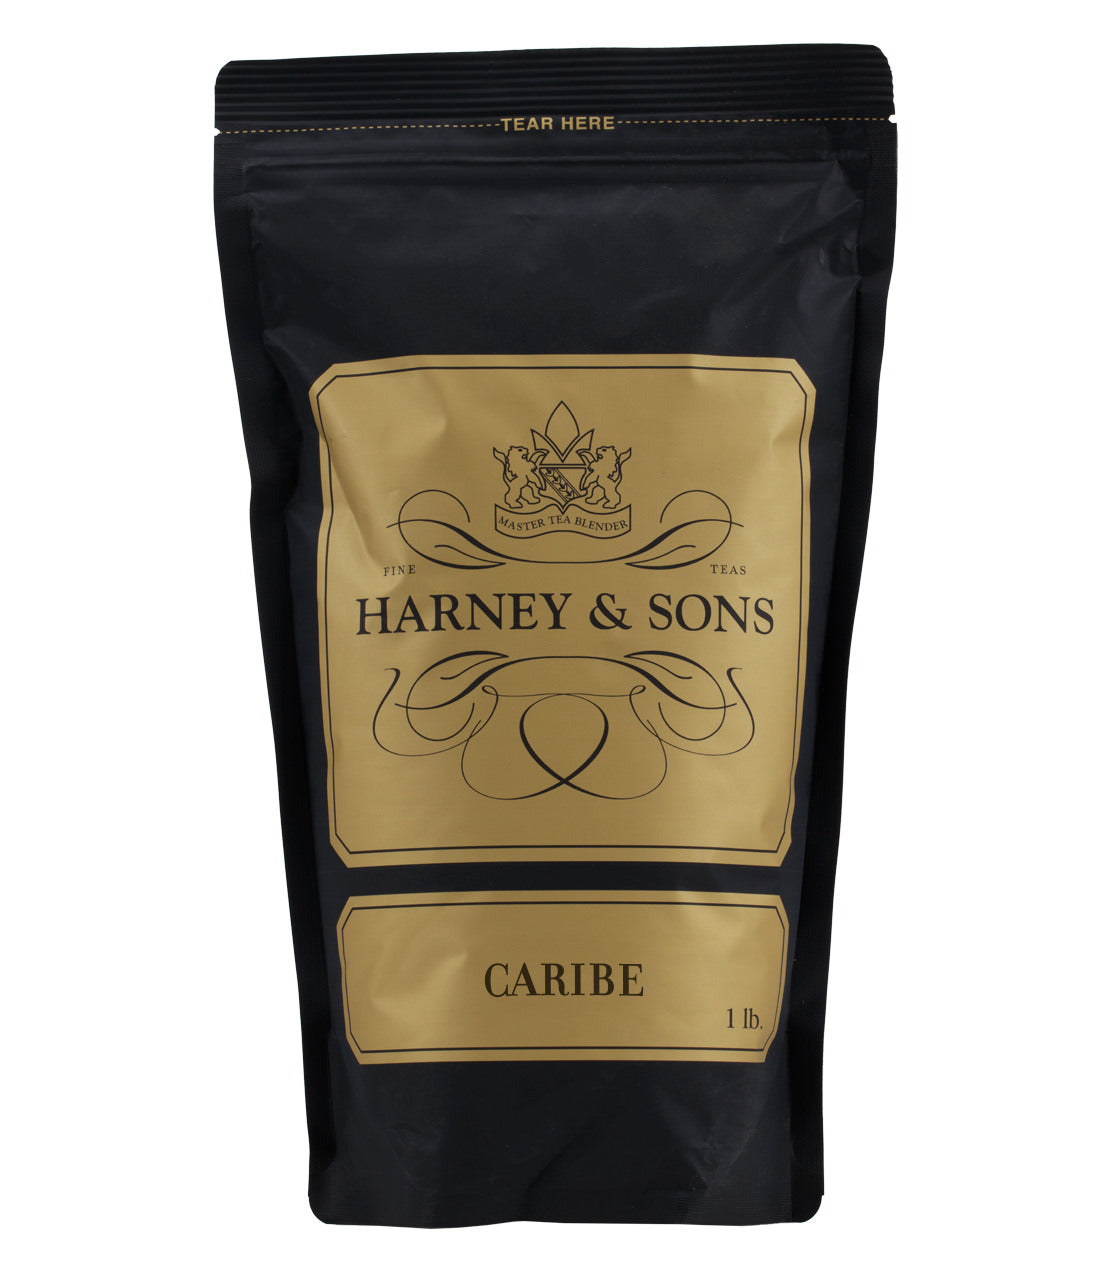 Caribe - Loose 1 lb. Bag - Harney & Sons Fine Teas